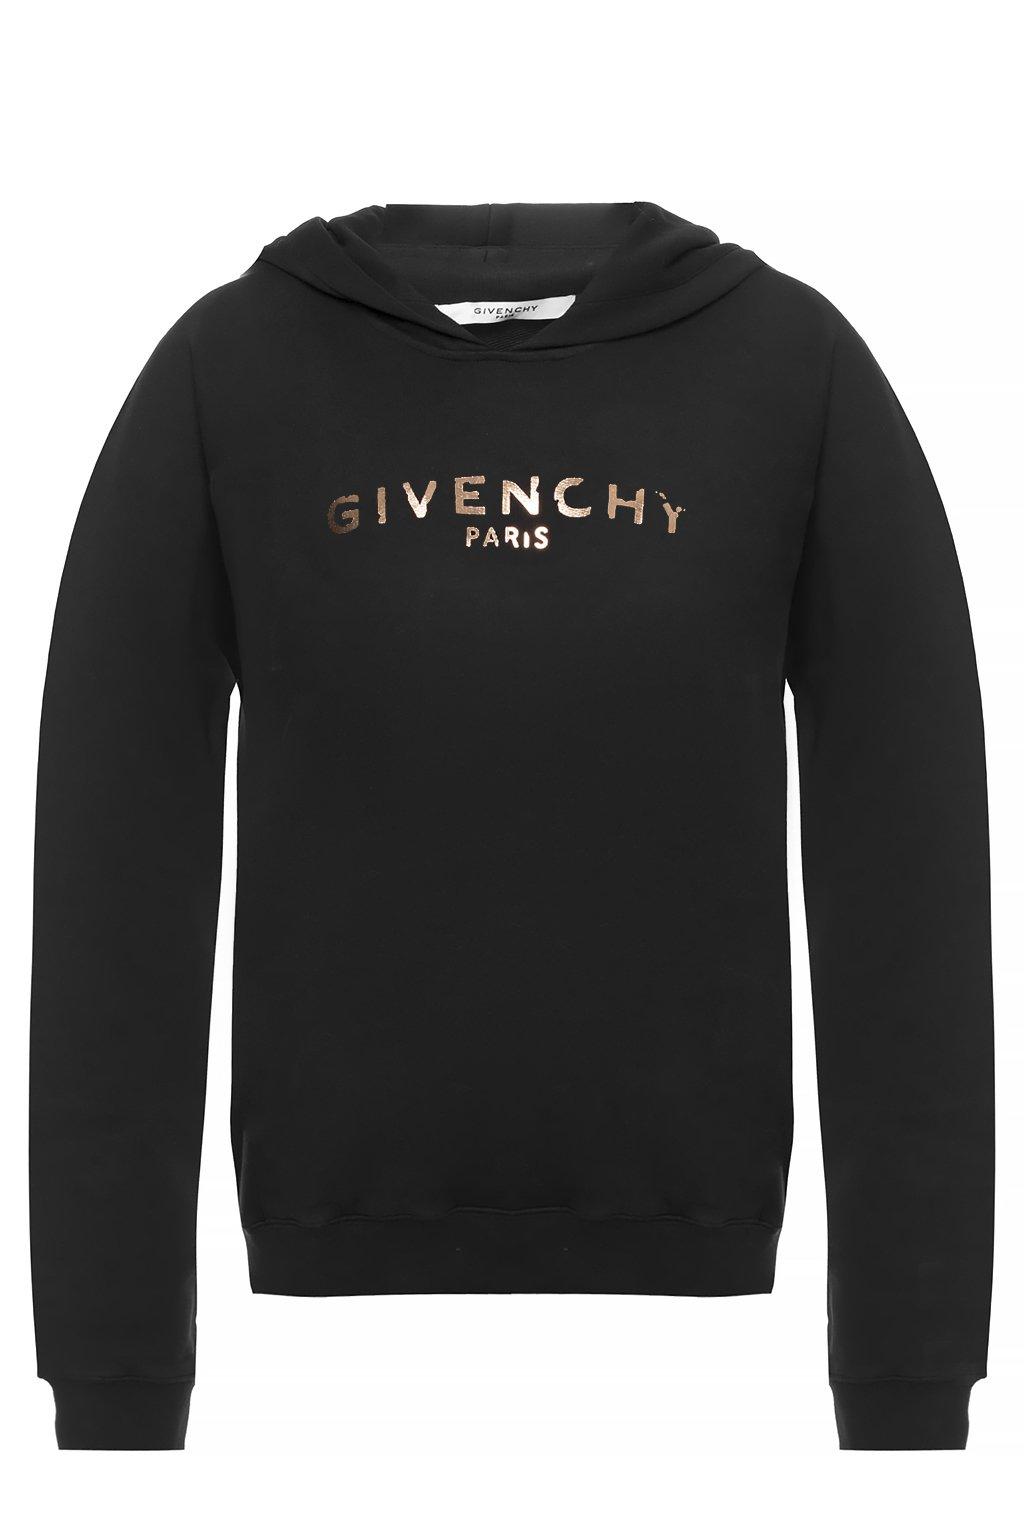 Givenchy Cotton Branded Sweatshirt Black - Lyst